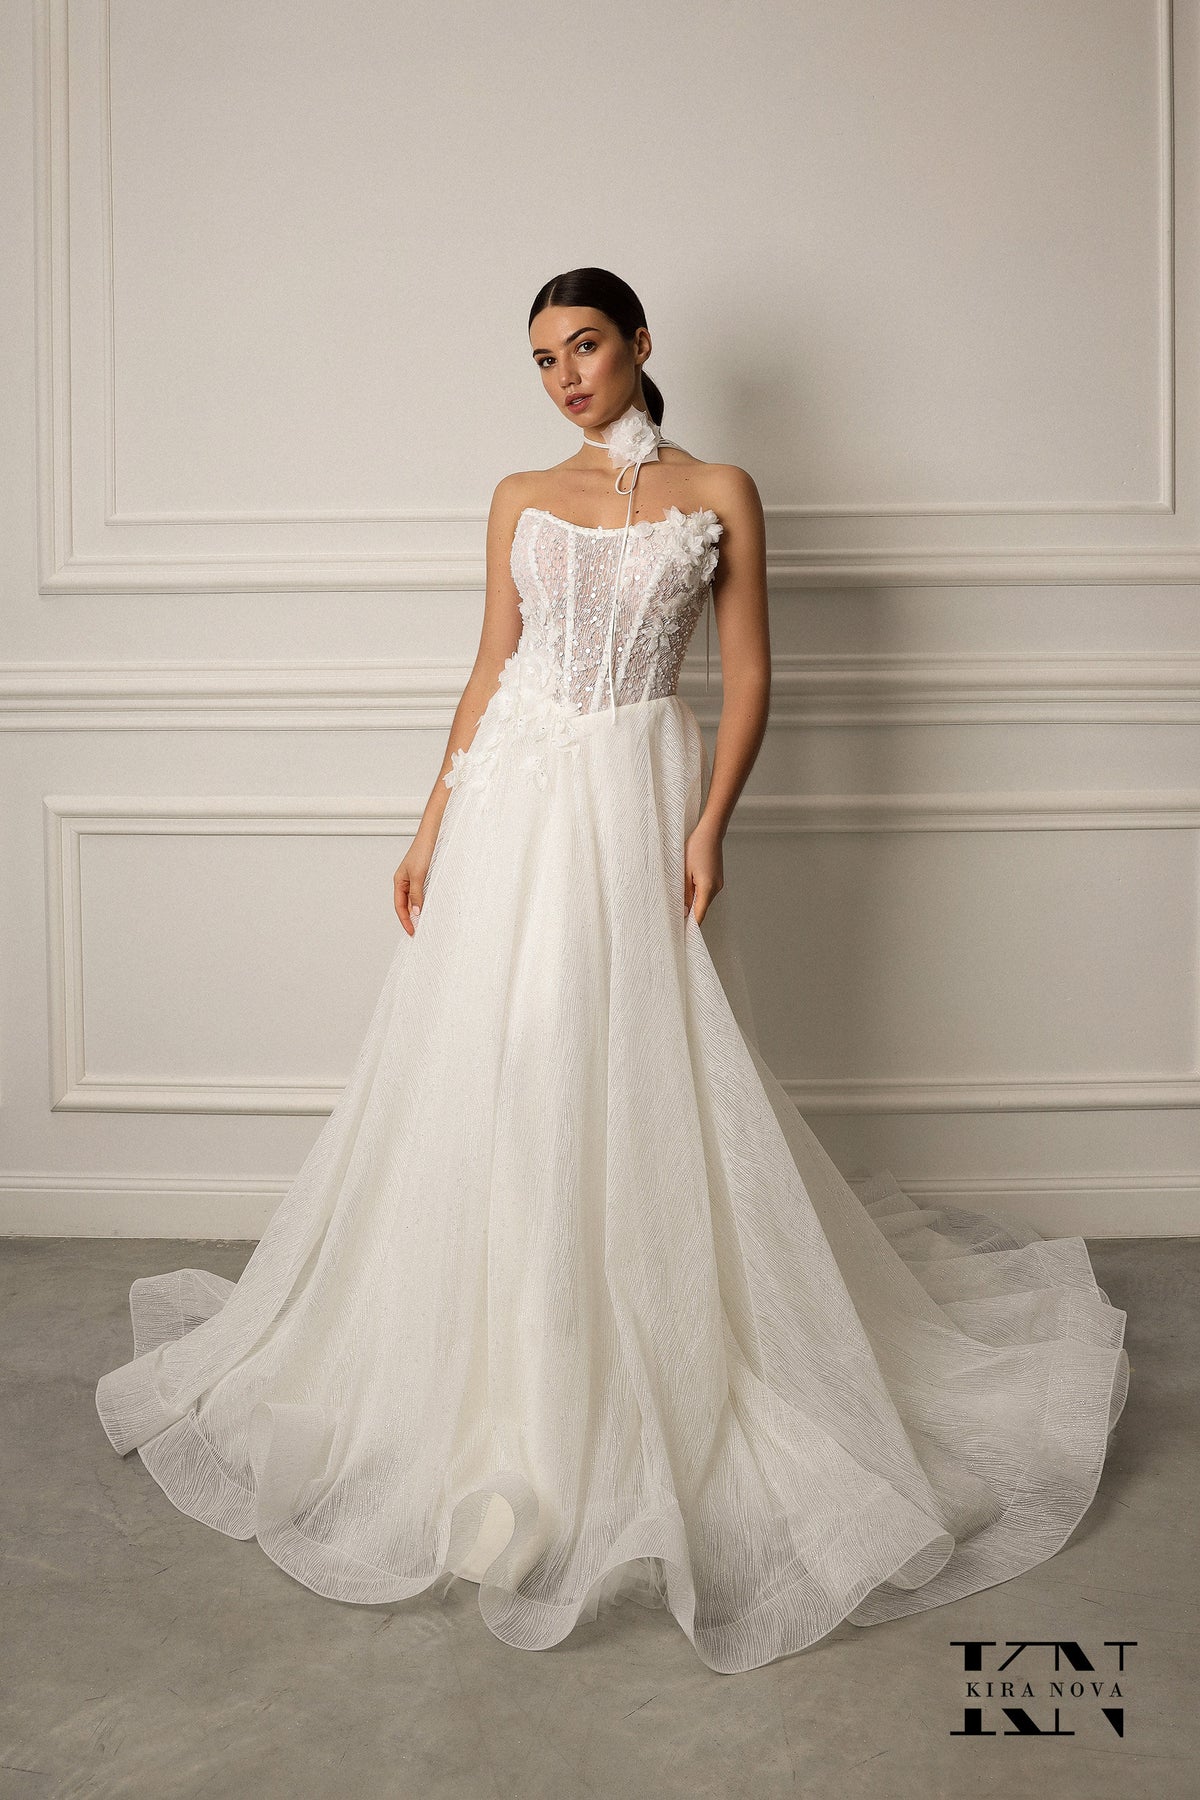 Stunning Sleeveless Strapless Wedding Dress Sparkle Bridal Gown Full Aline With Train Slight Sweetheart Neckline 3D Flowers Basque Waist